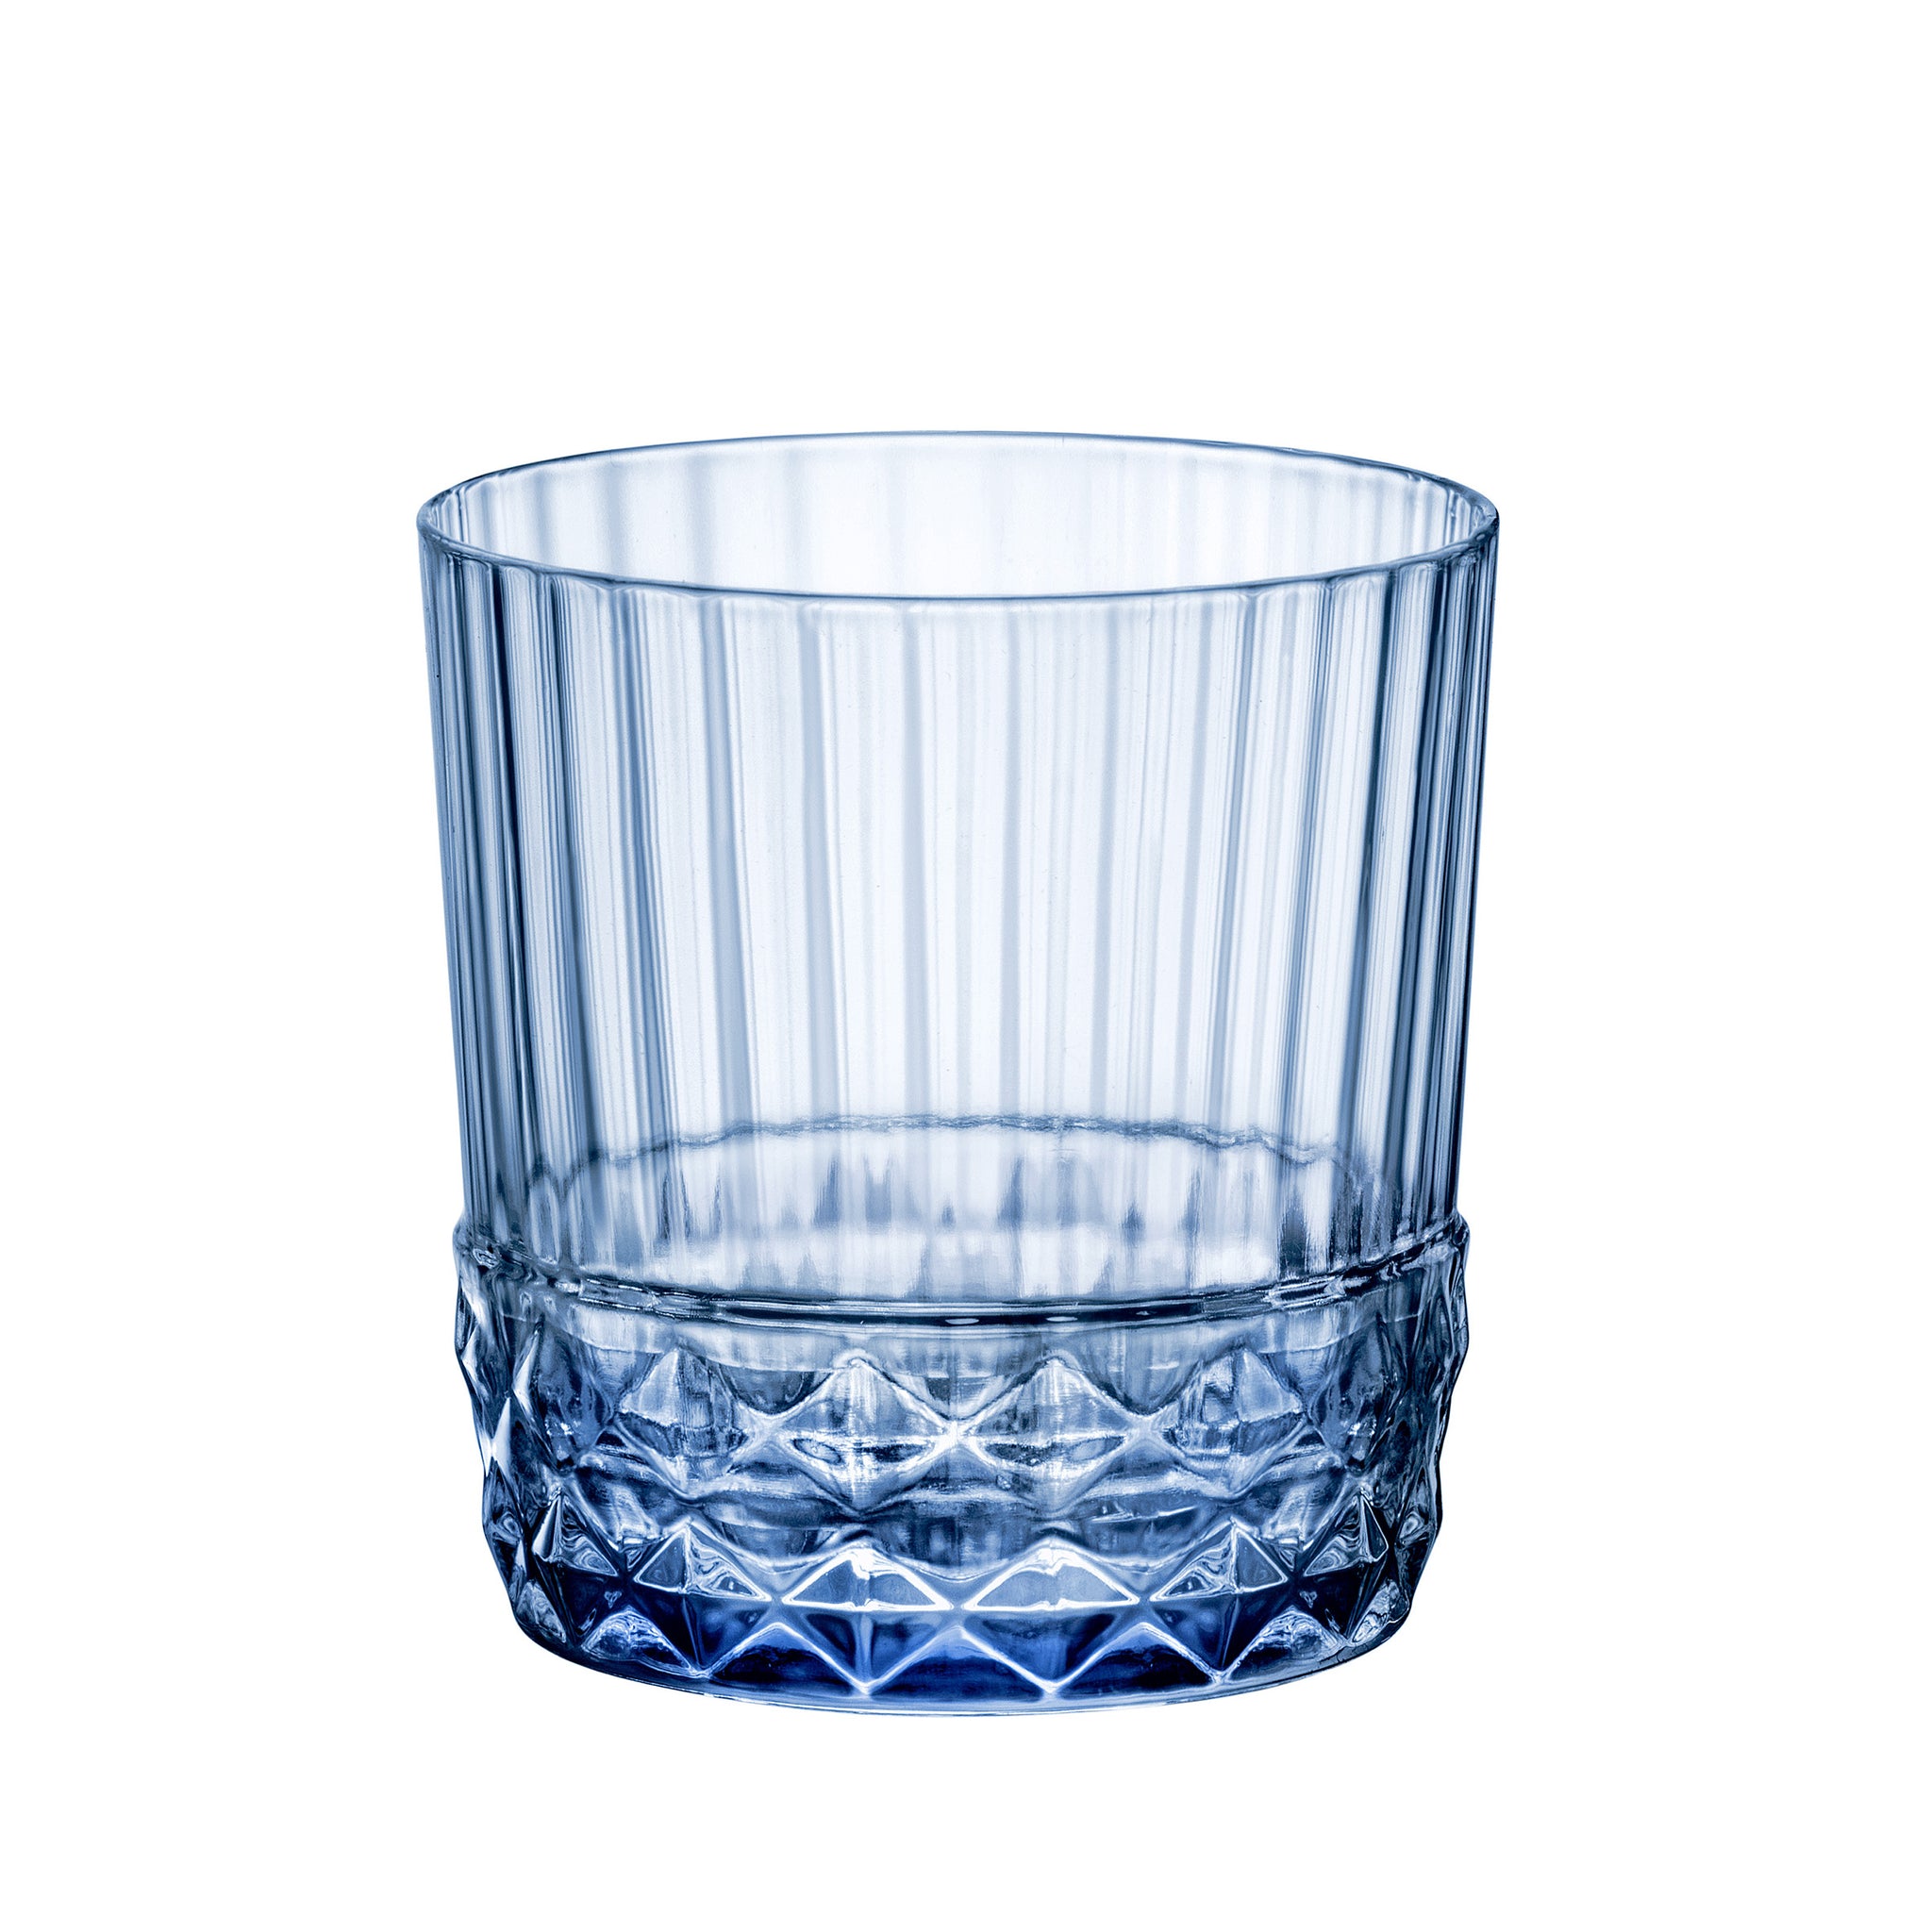 America '20s 13.5 oz. Long Drink Drinking Glasses (Set of 4)